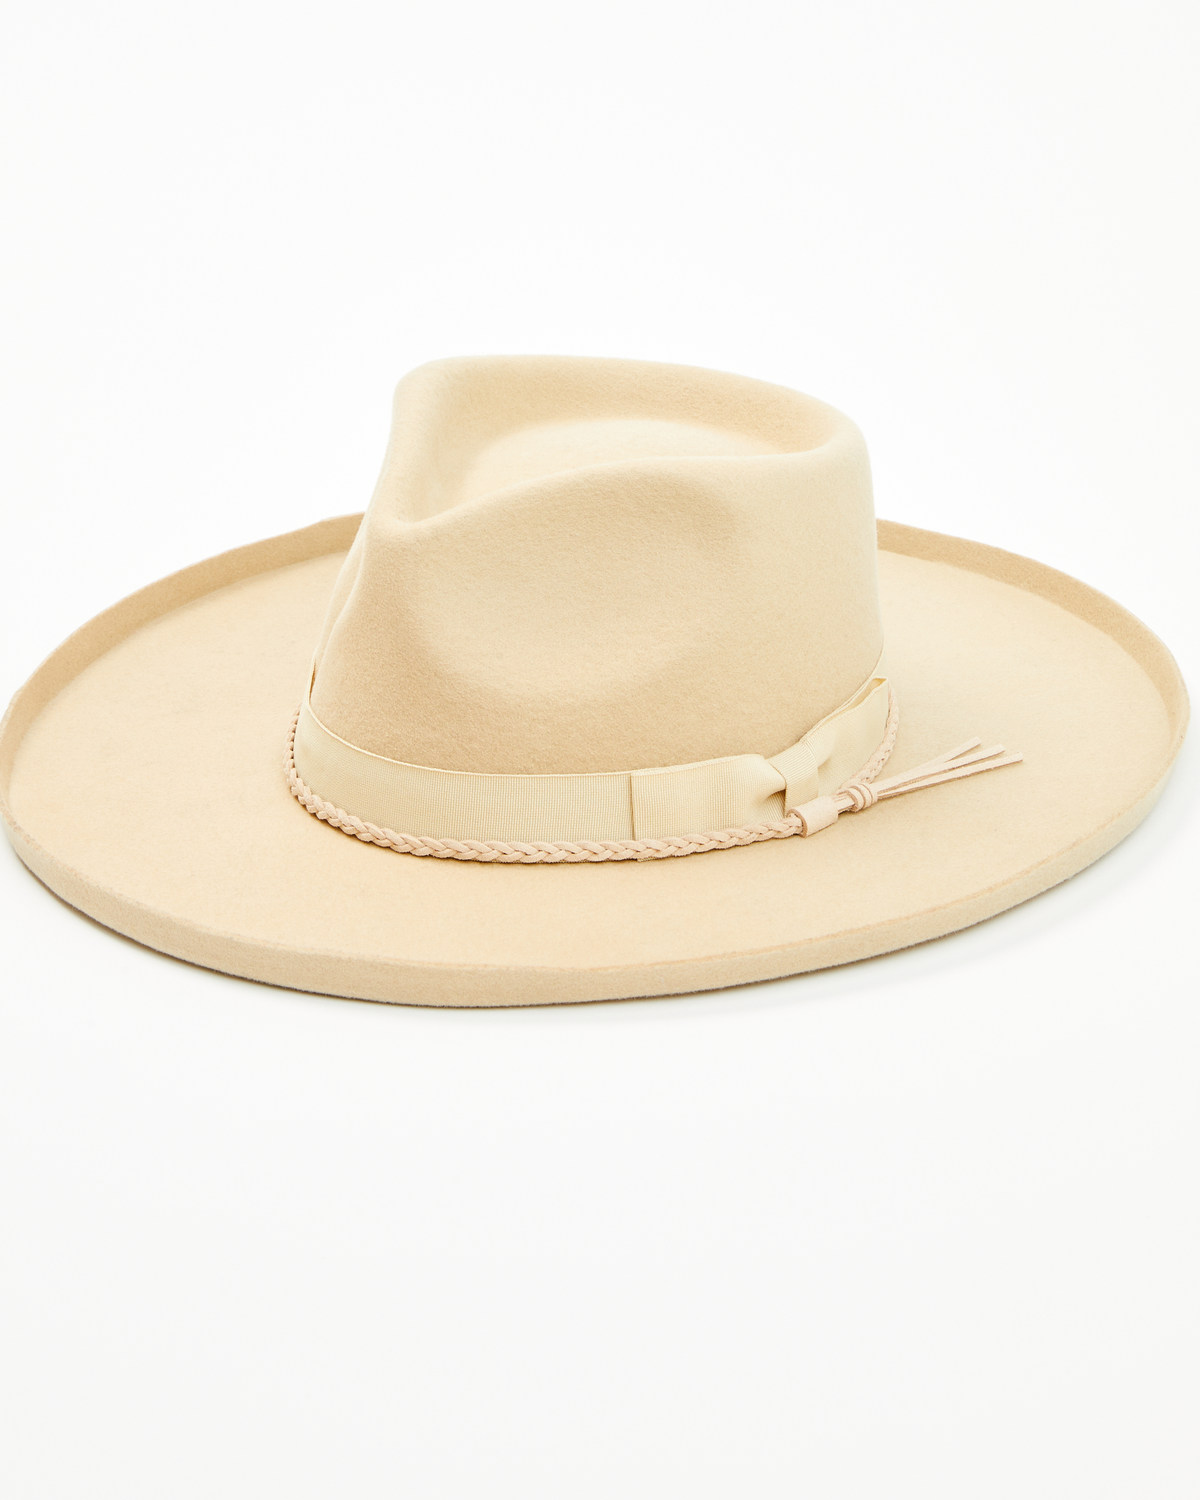 Shyanne Women's Felt Western Fashion Hat